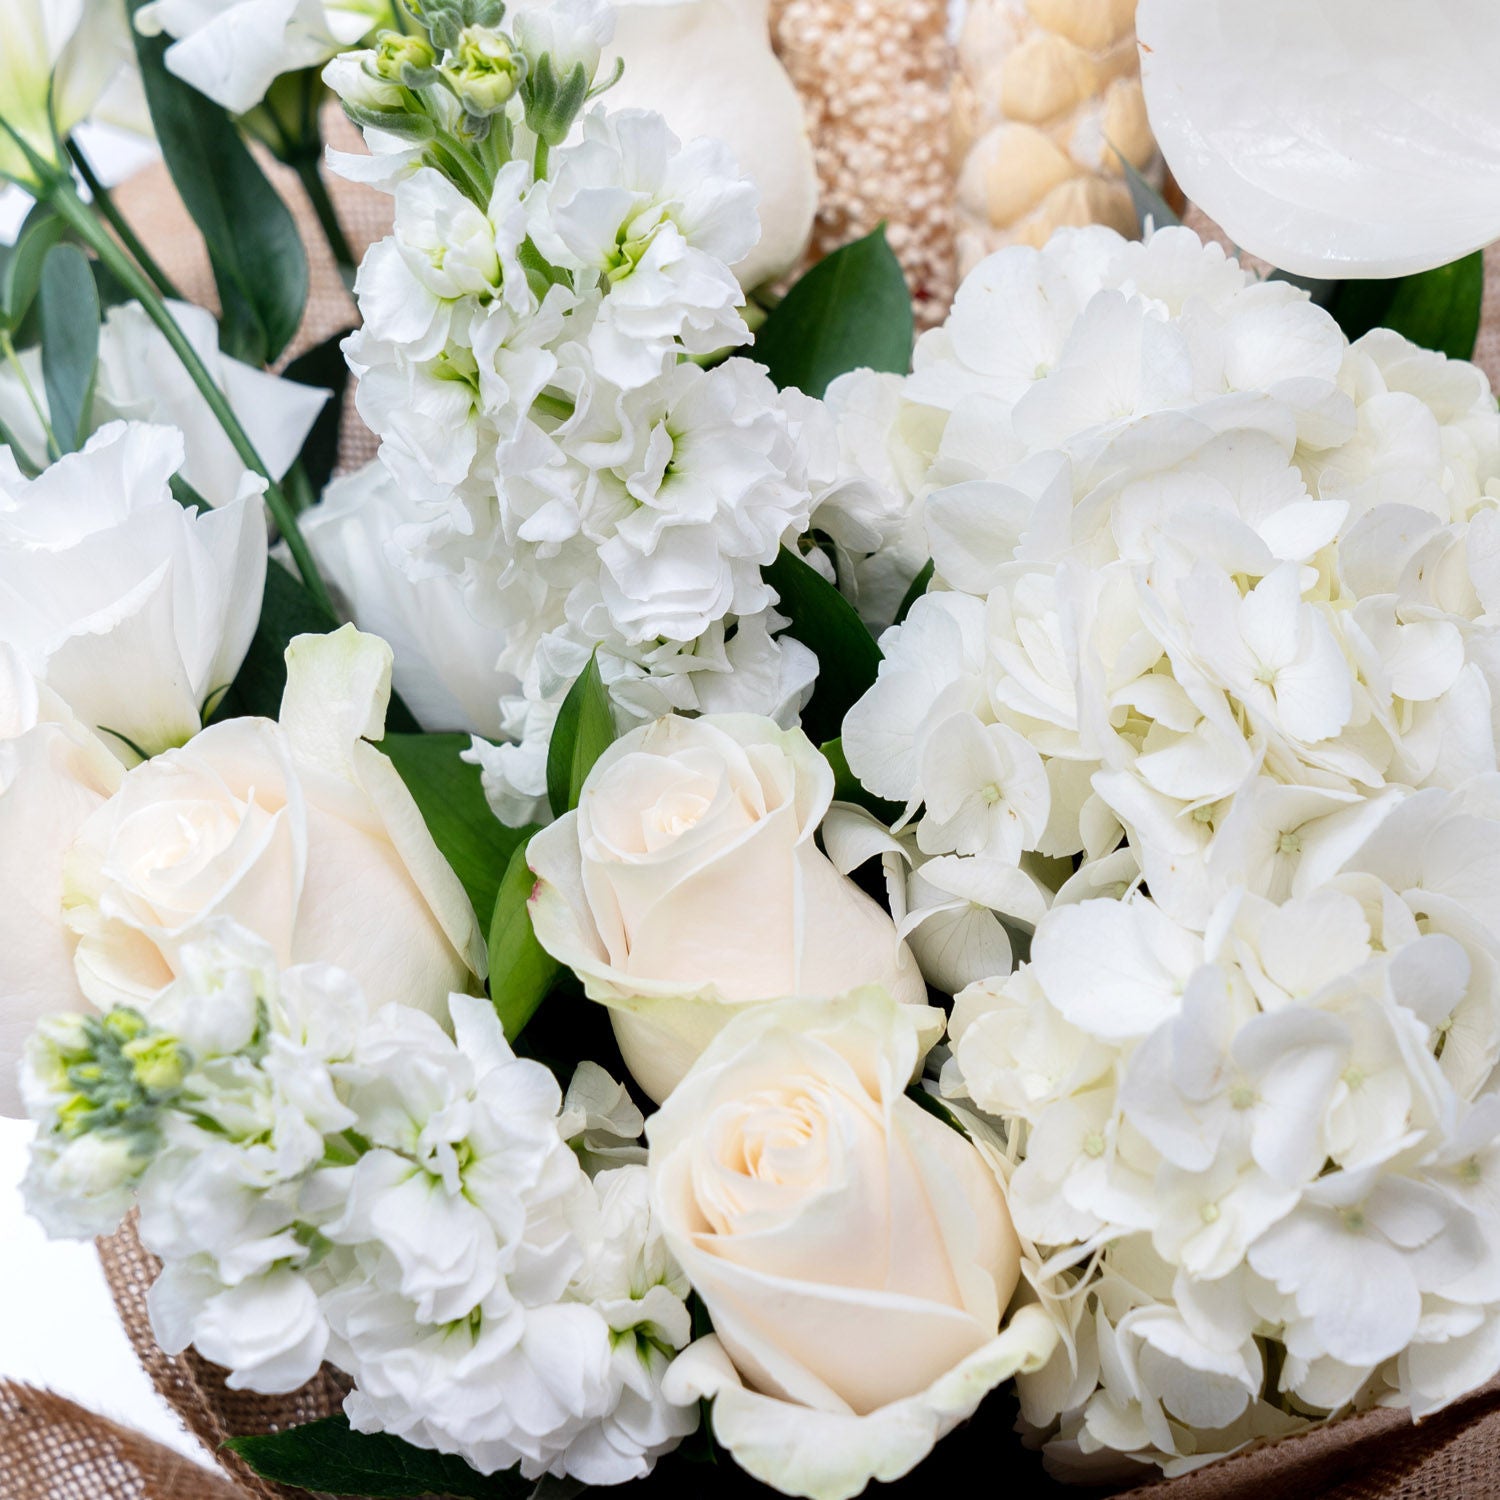 Beautiful White Flowers Bouquet